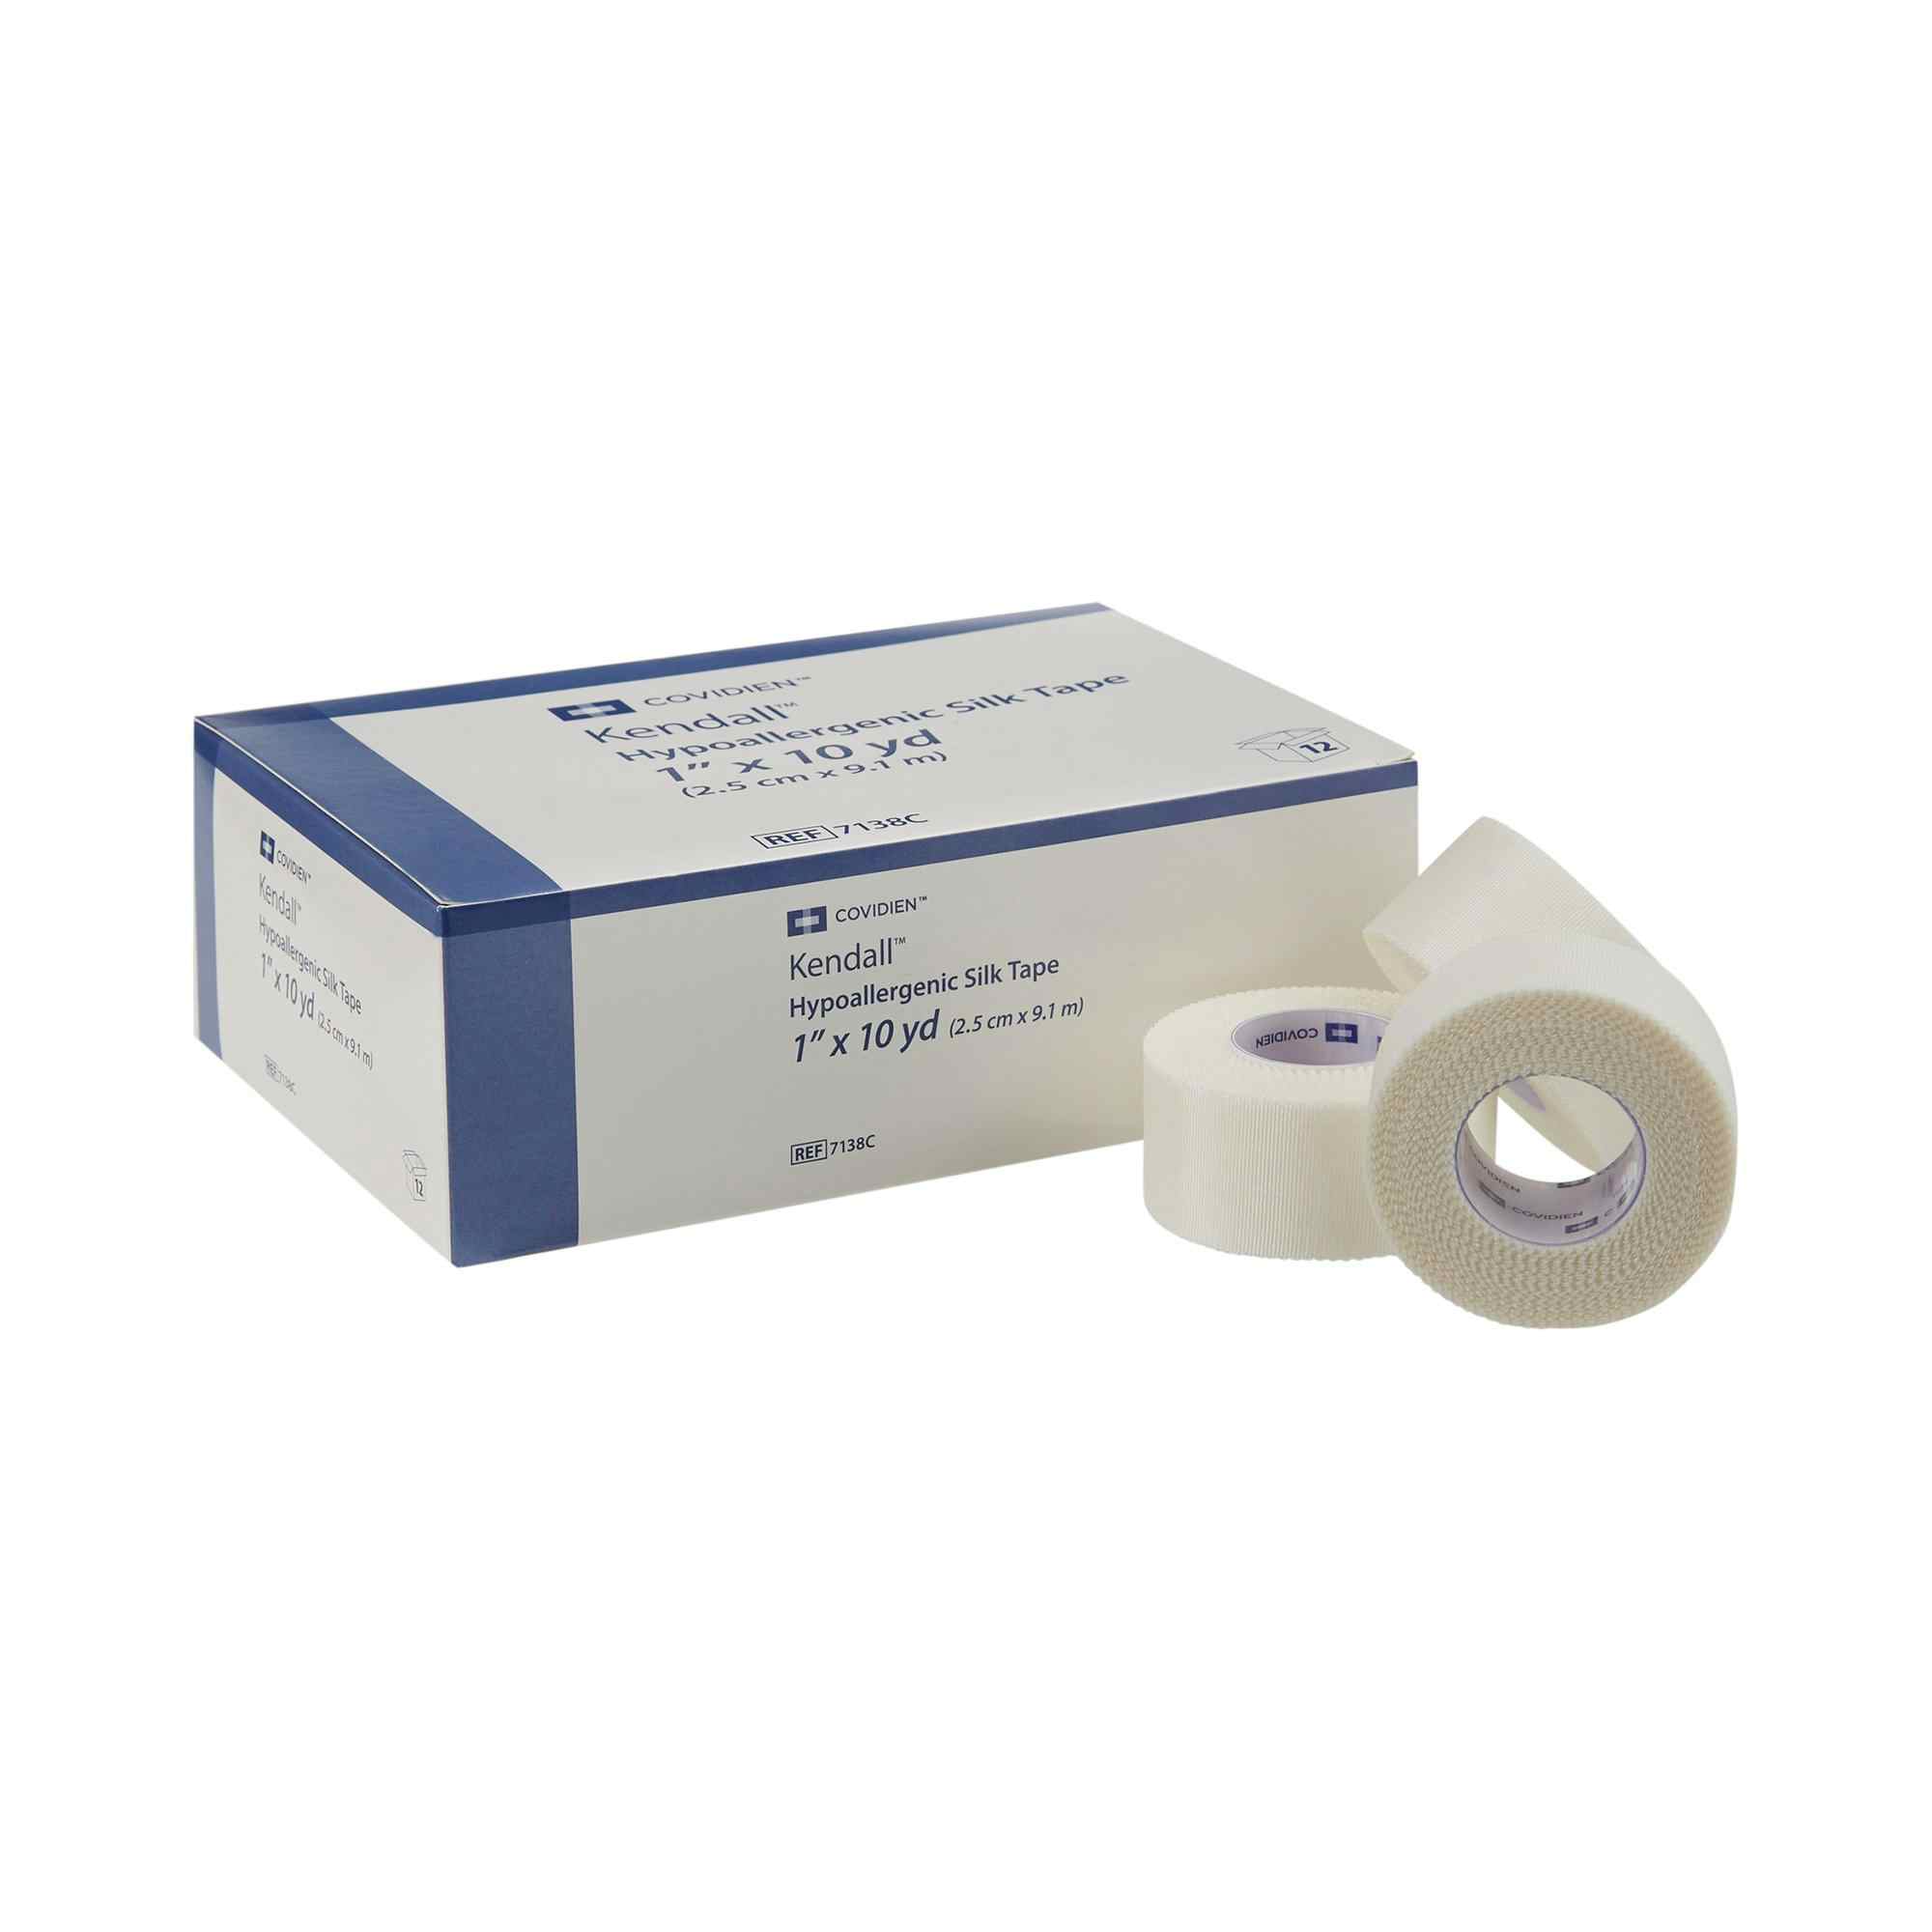 Kendall Hypoallergenic Silk-like Medical Tape, 1 Inch x 10 Yard, 7138C, Box of 12